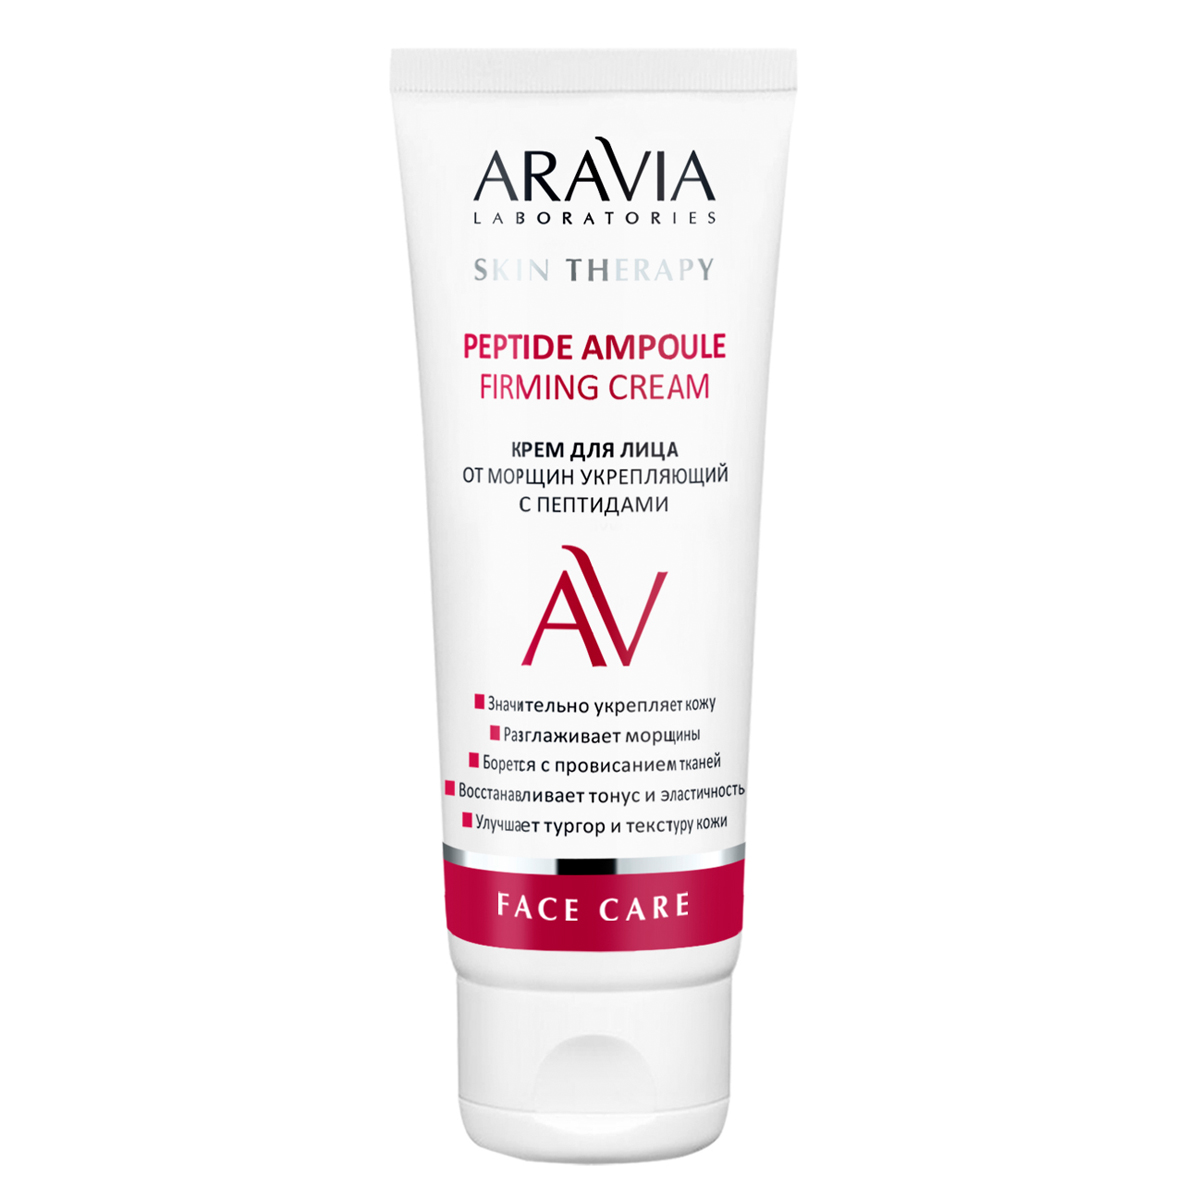 Aravia Laboratories Крем для лица от морщин укрепляющий с пептидами Peptide Ampoule Firming Cream, 50 мл (Aravia Laboratories, Уход за лицом)